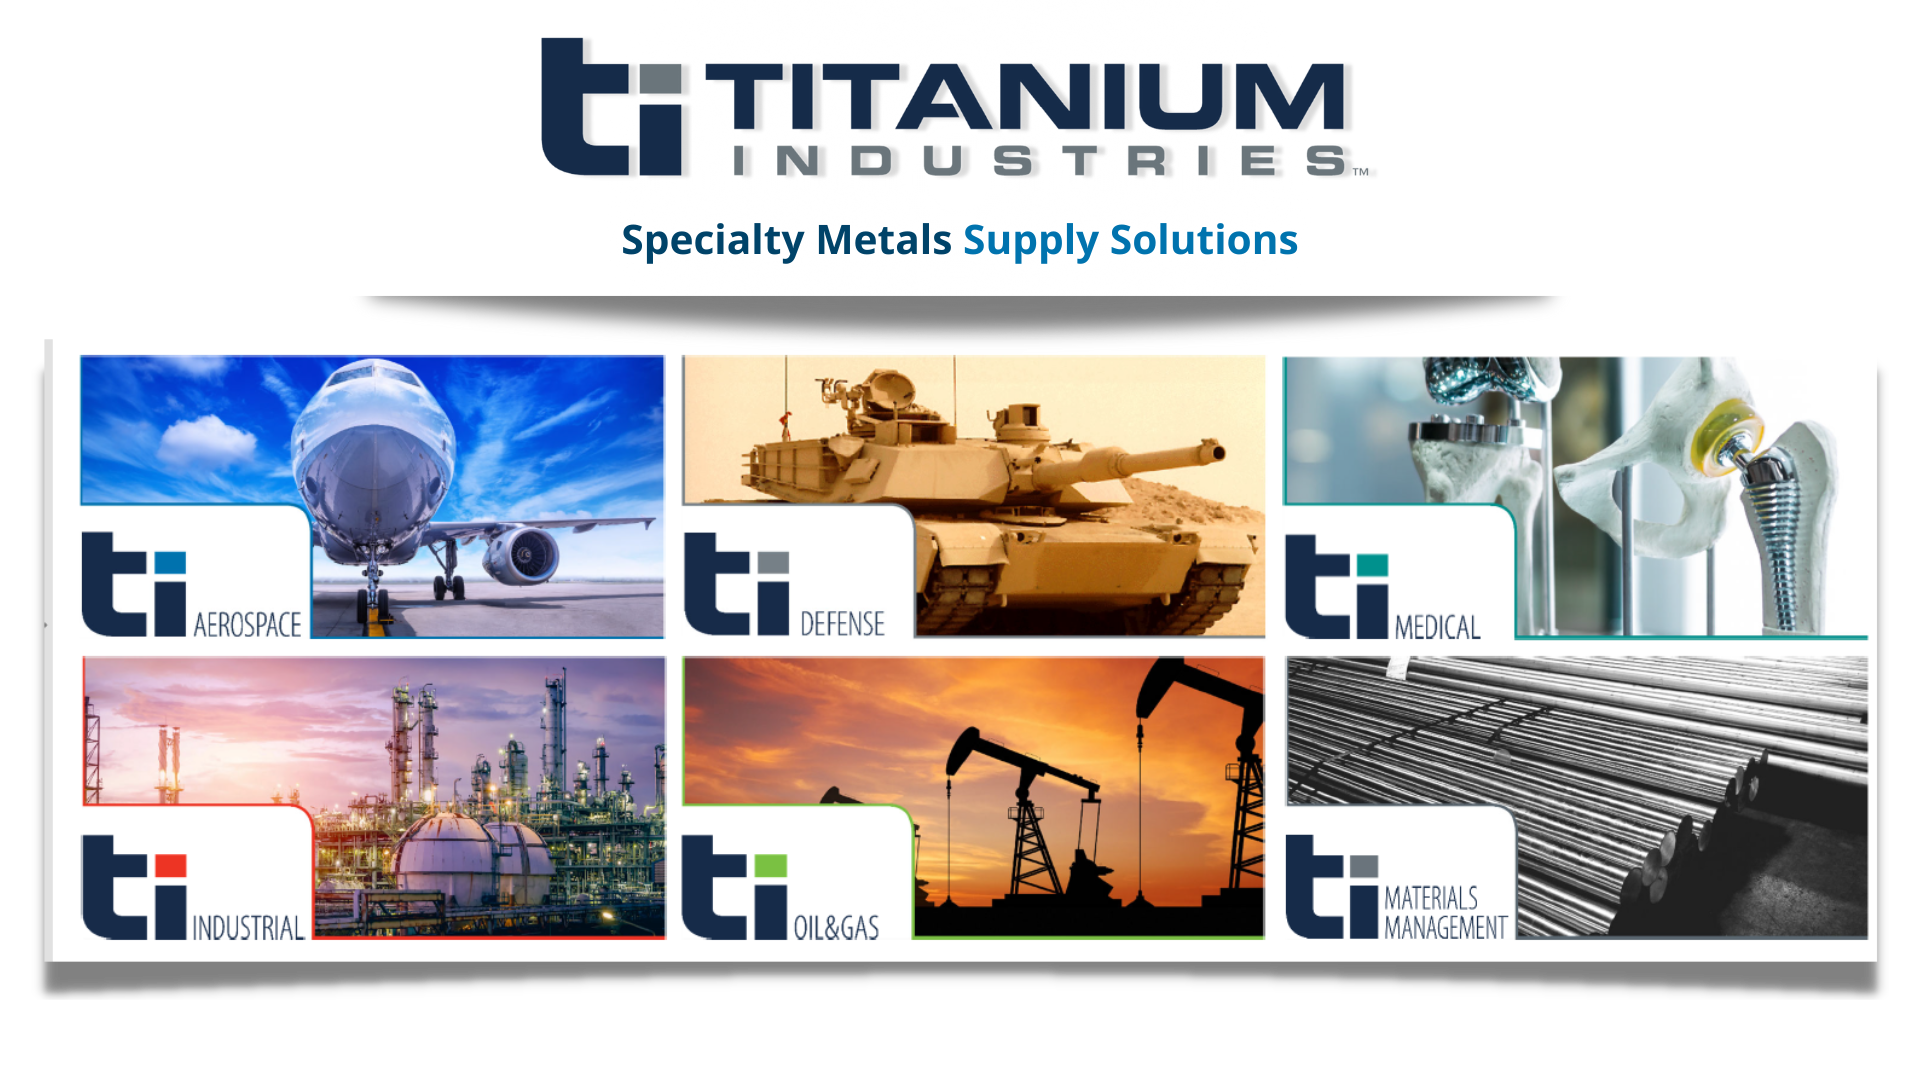 Titanium Industries Markets